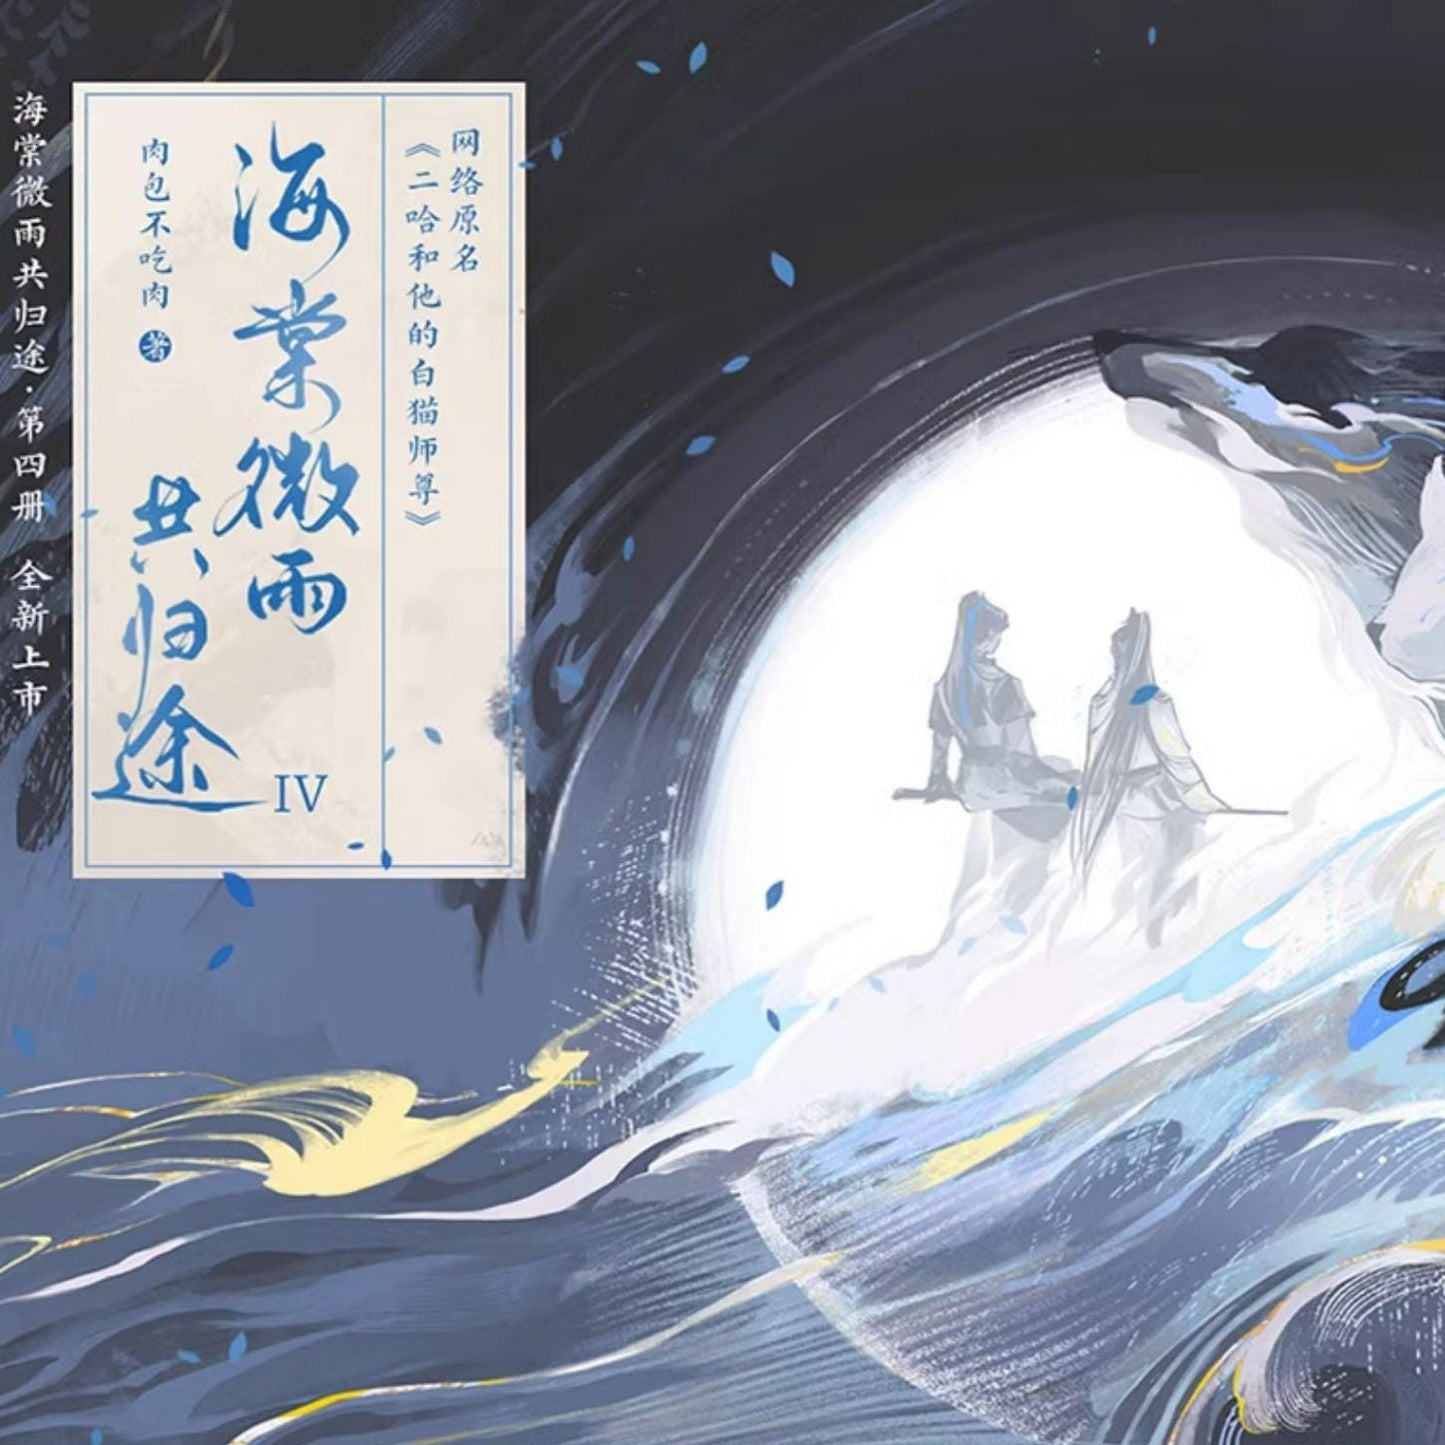 2Ha Chinese Novel Vol.4 20514:308383